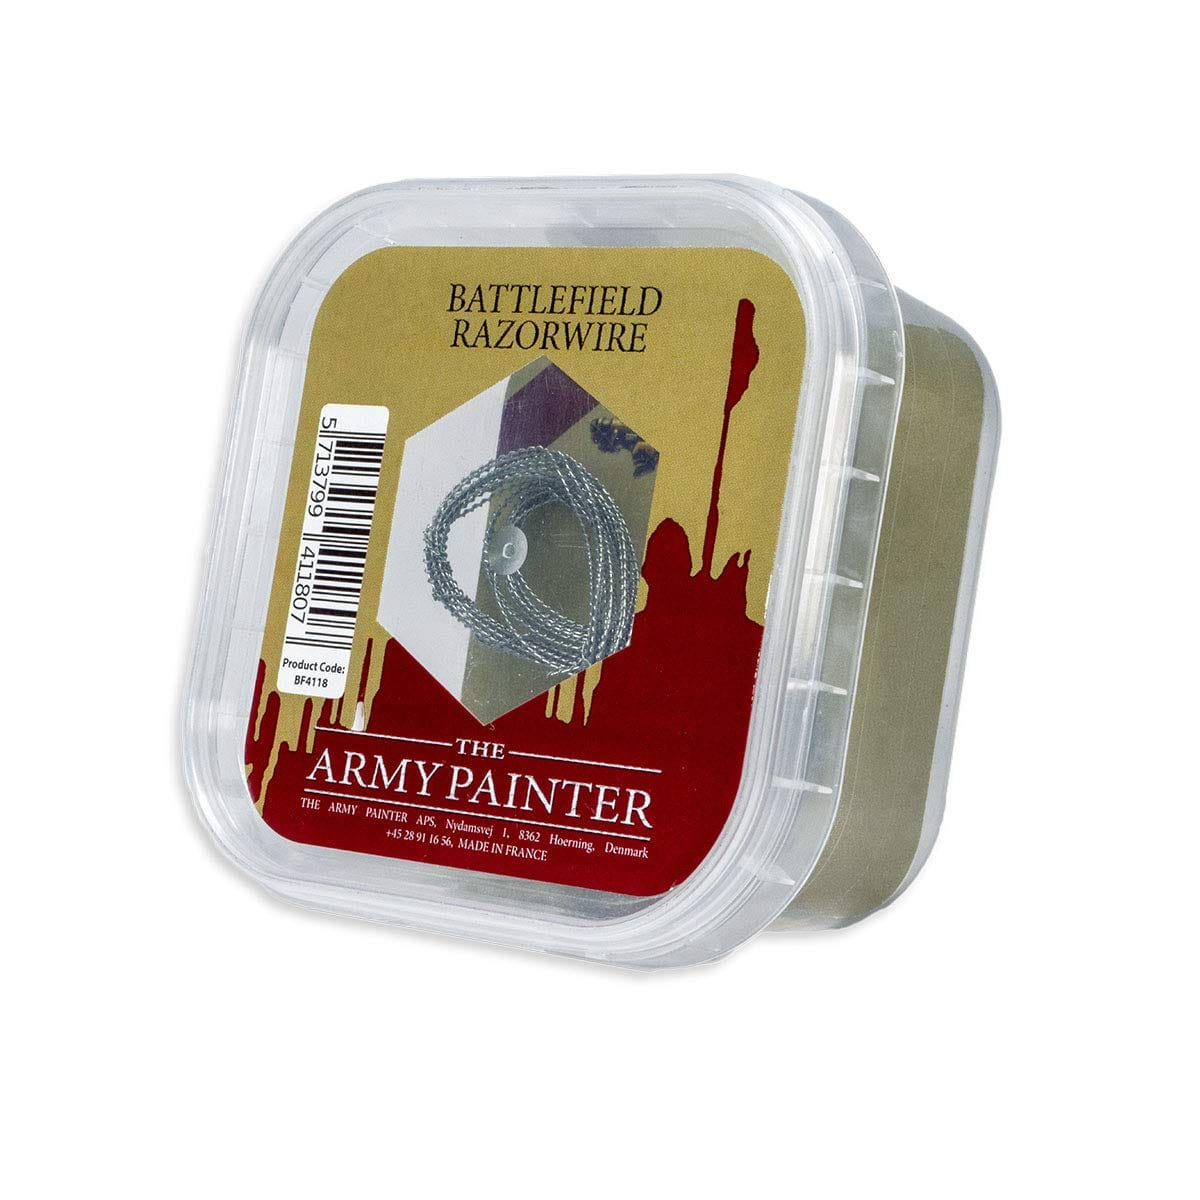 The Army Painter Accessories The Army Painter Battlefields: Battlefield Razorwire